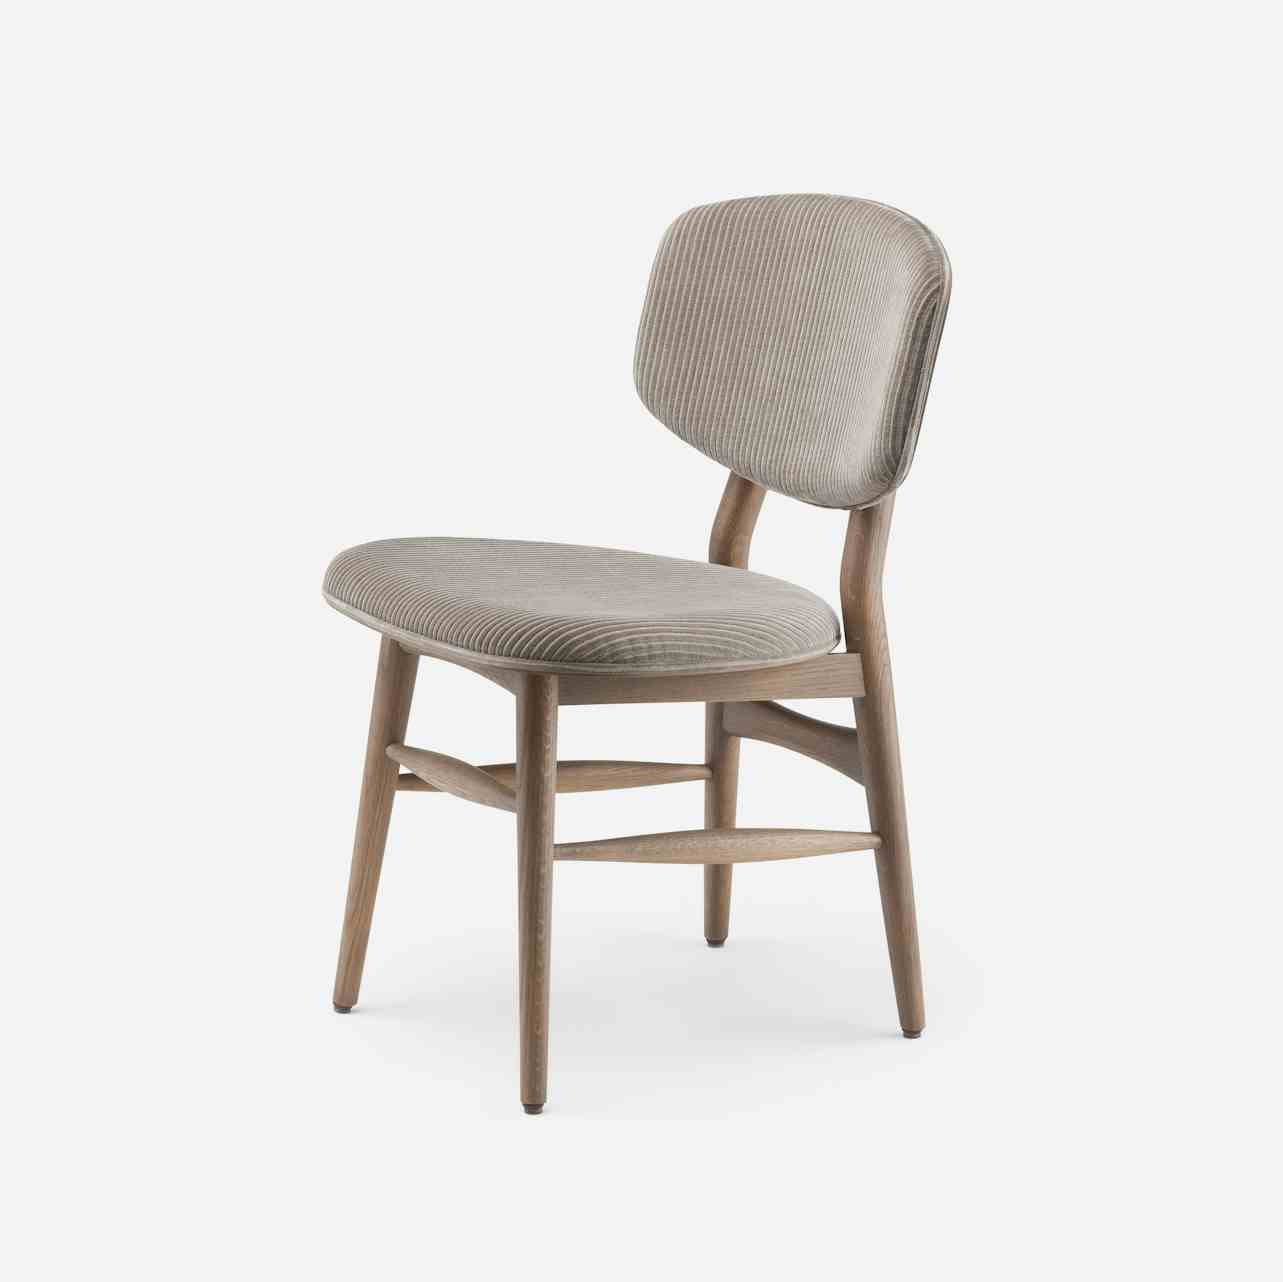 249 Butterfly Chair by Autoban for De La Espada in oxidised oak and Phlox 243 fabric